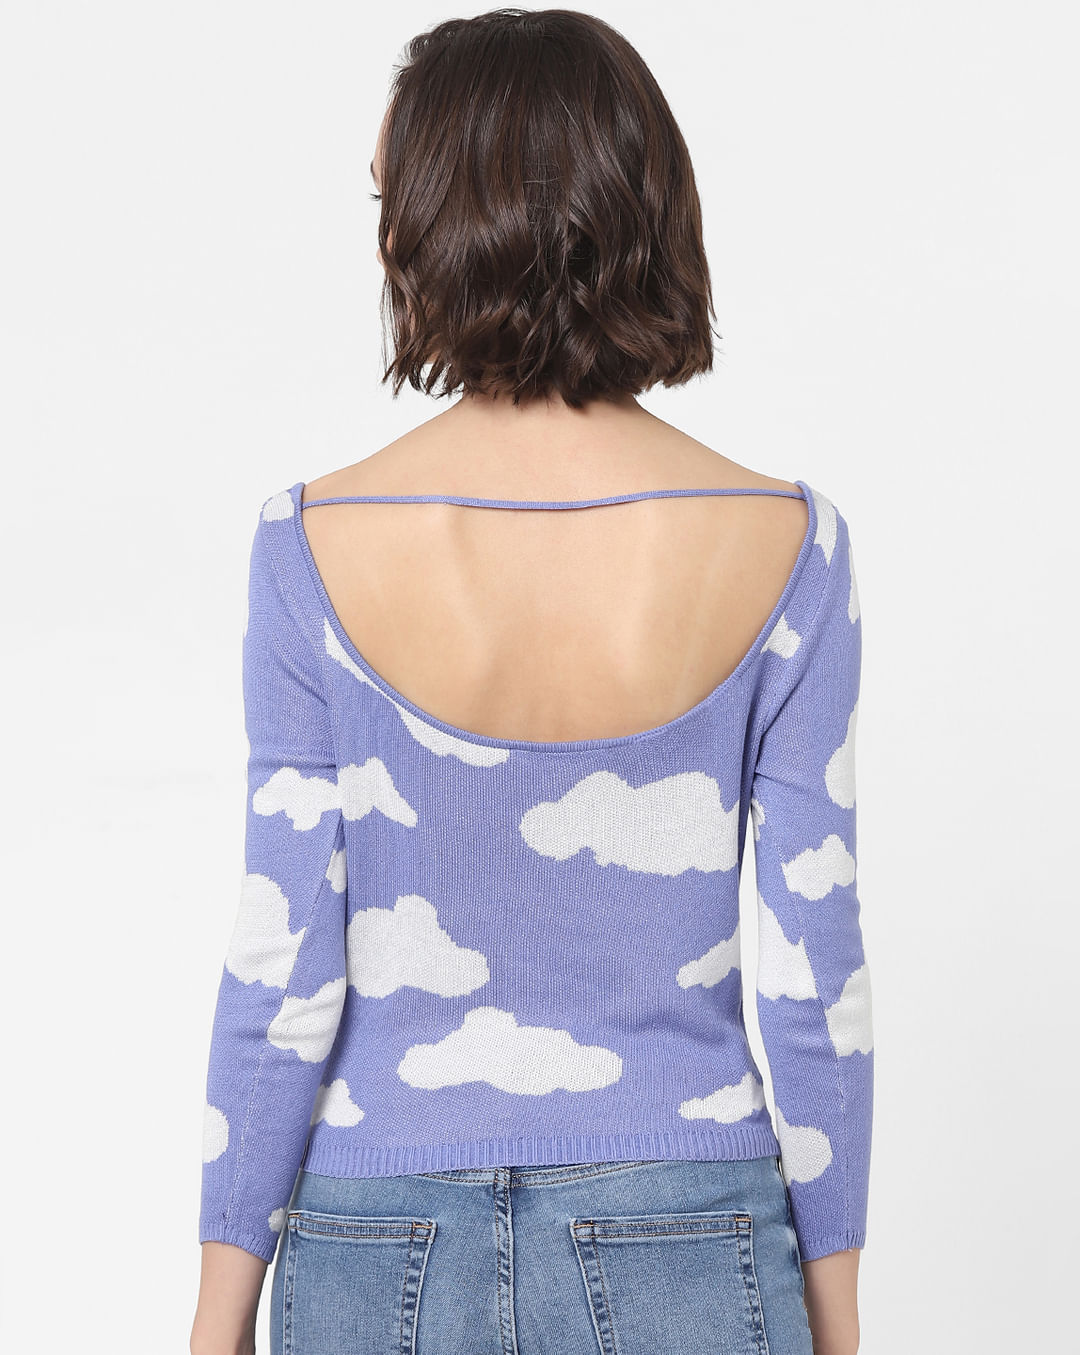 Buy Light Purple Cloud Knit Top for Women, ONLY